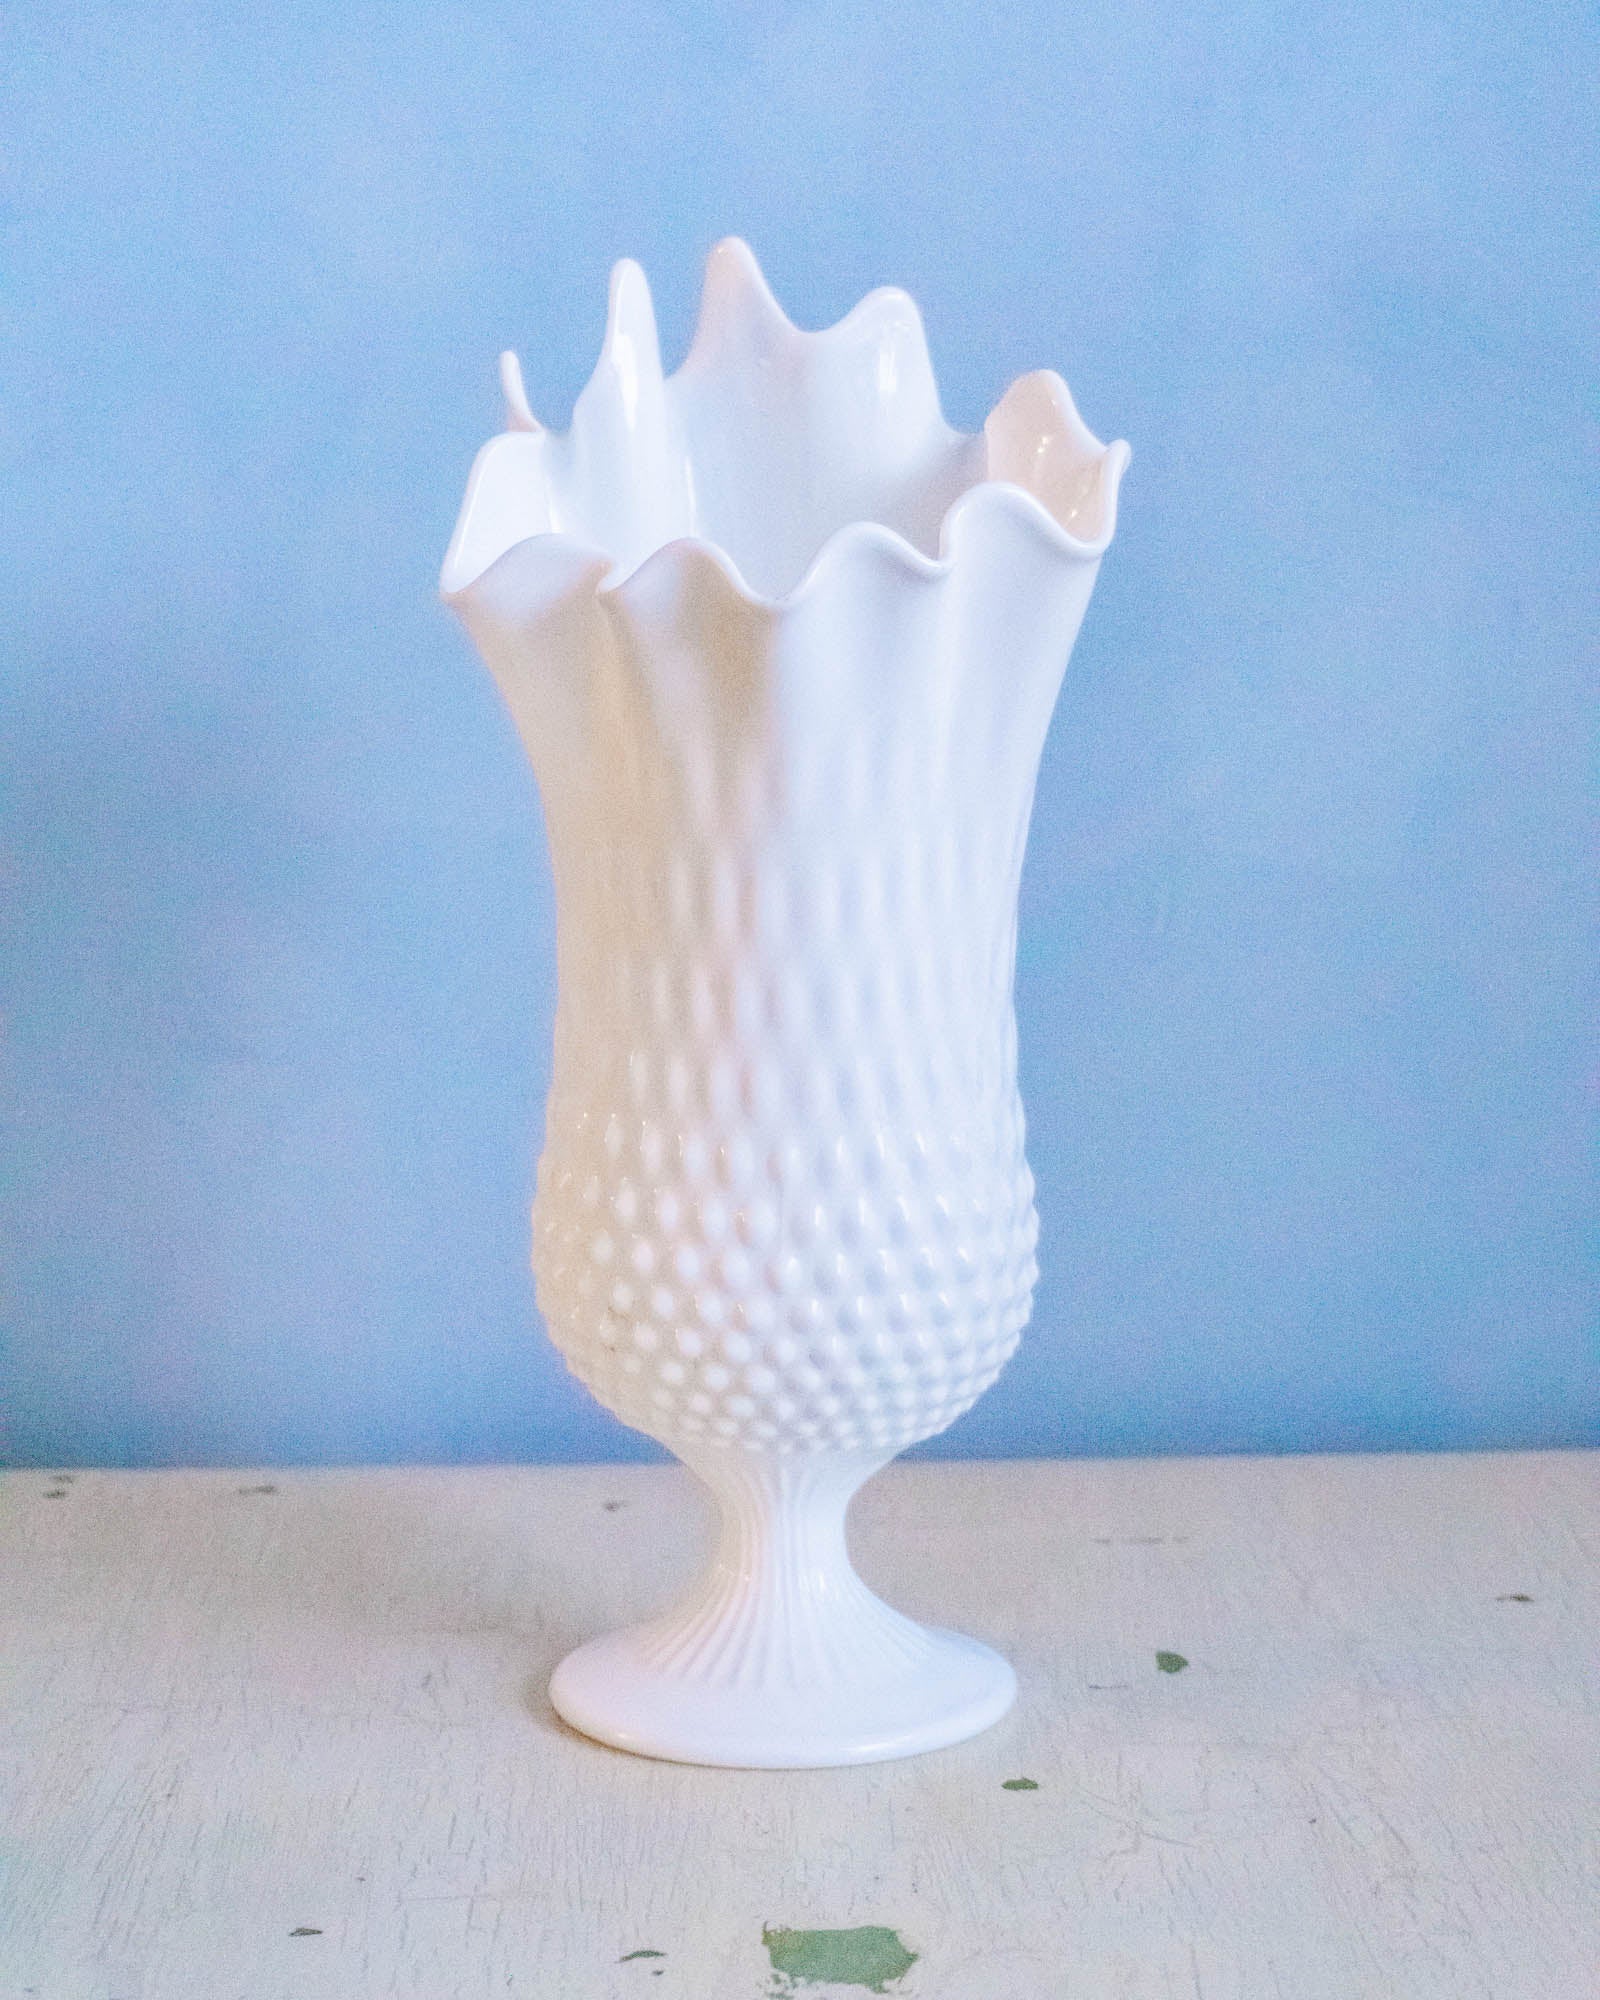 Milk Glass Vases -Small